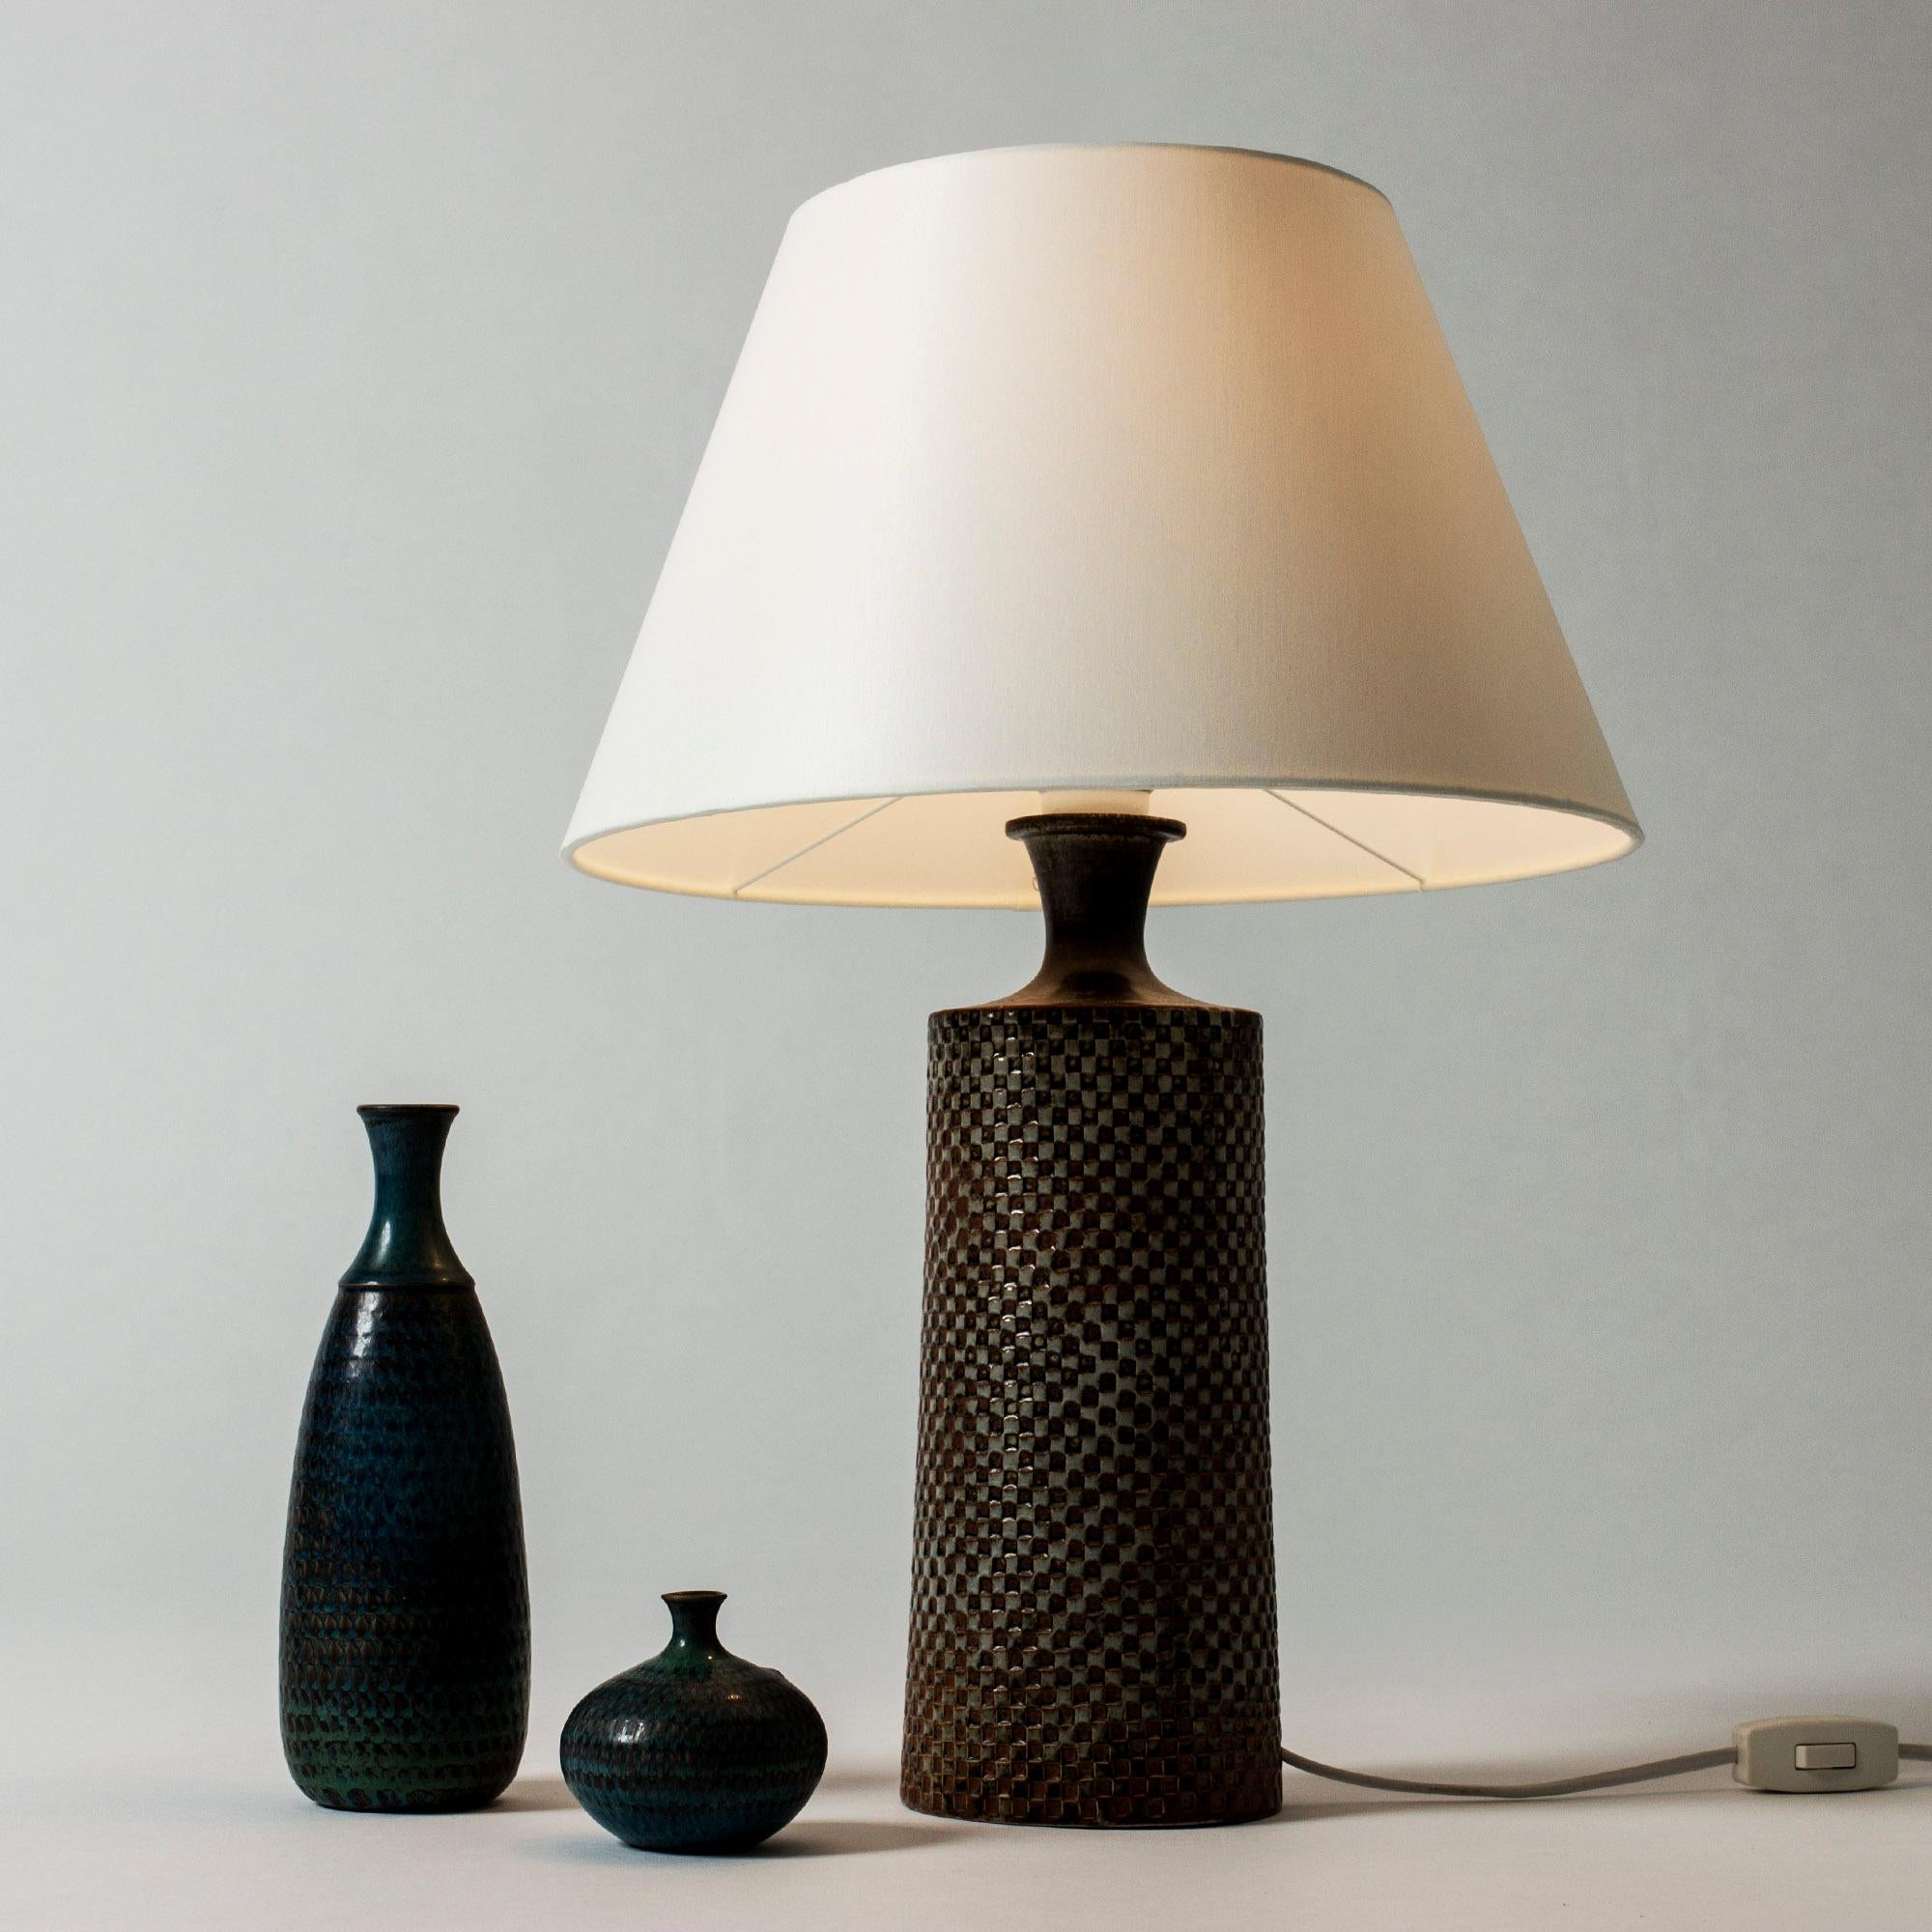 Mid-20th Century Stoneware Table Lamp Designed by Stig Lindberg for Gustavsberg, Sweden, 1950s